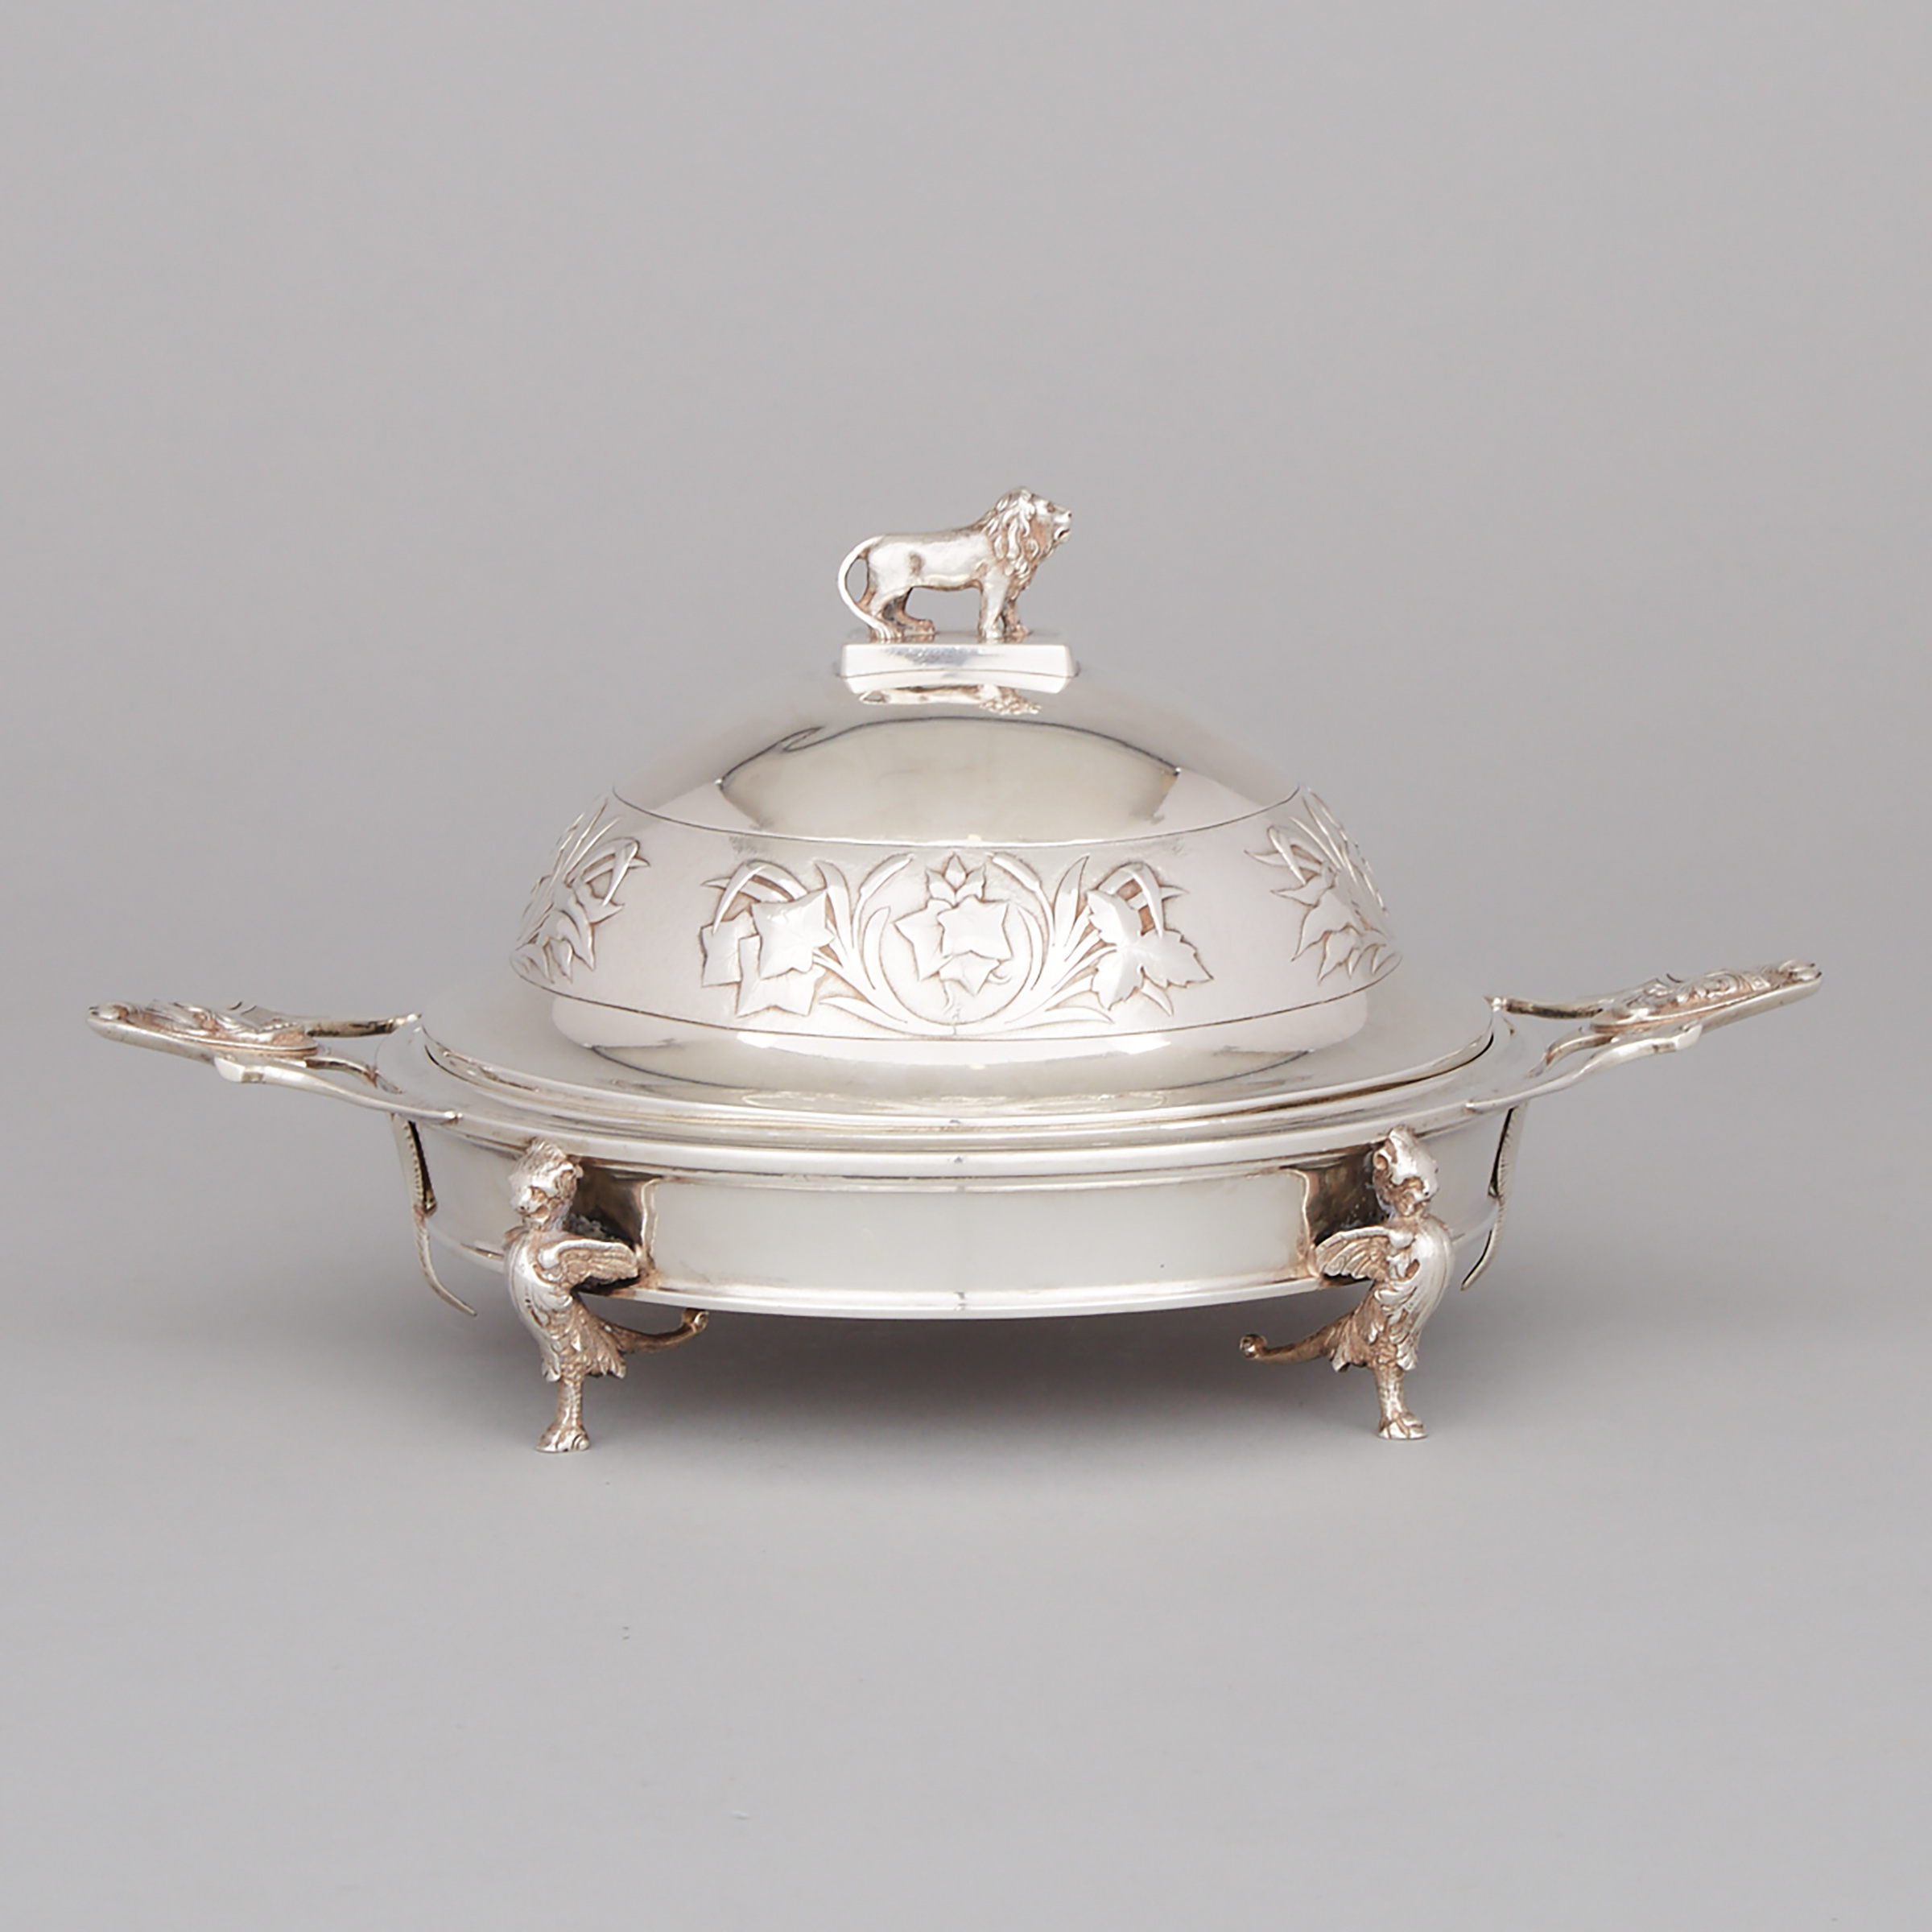 American Silver Breakfast Dish, Peter L. Krider, Philadelphia, Pa., for Clark & Biddle, mid-19th century